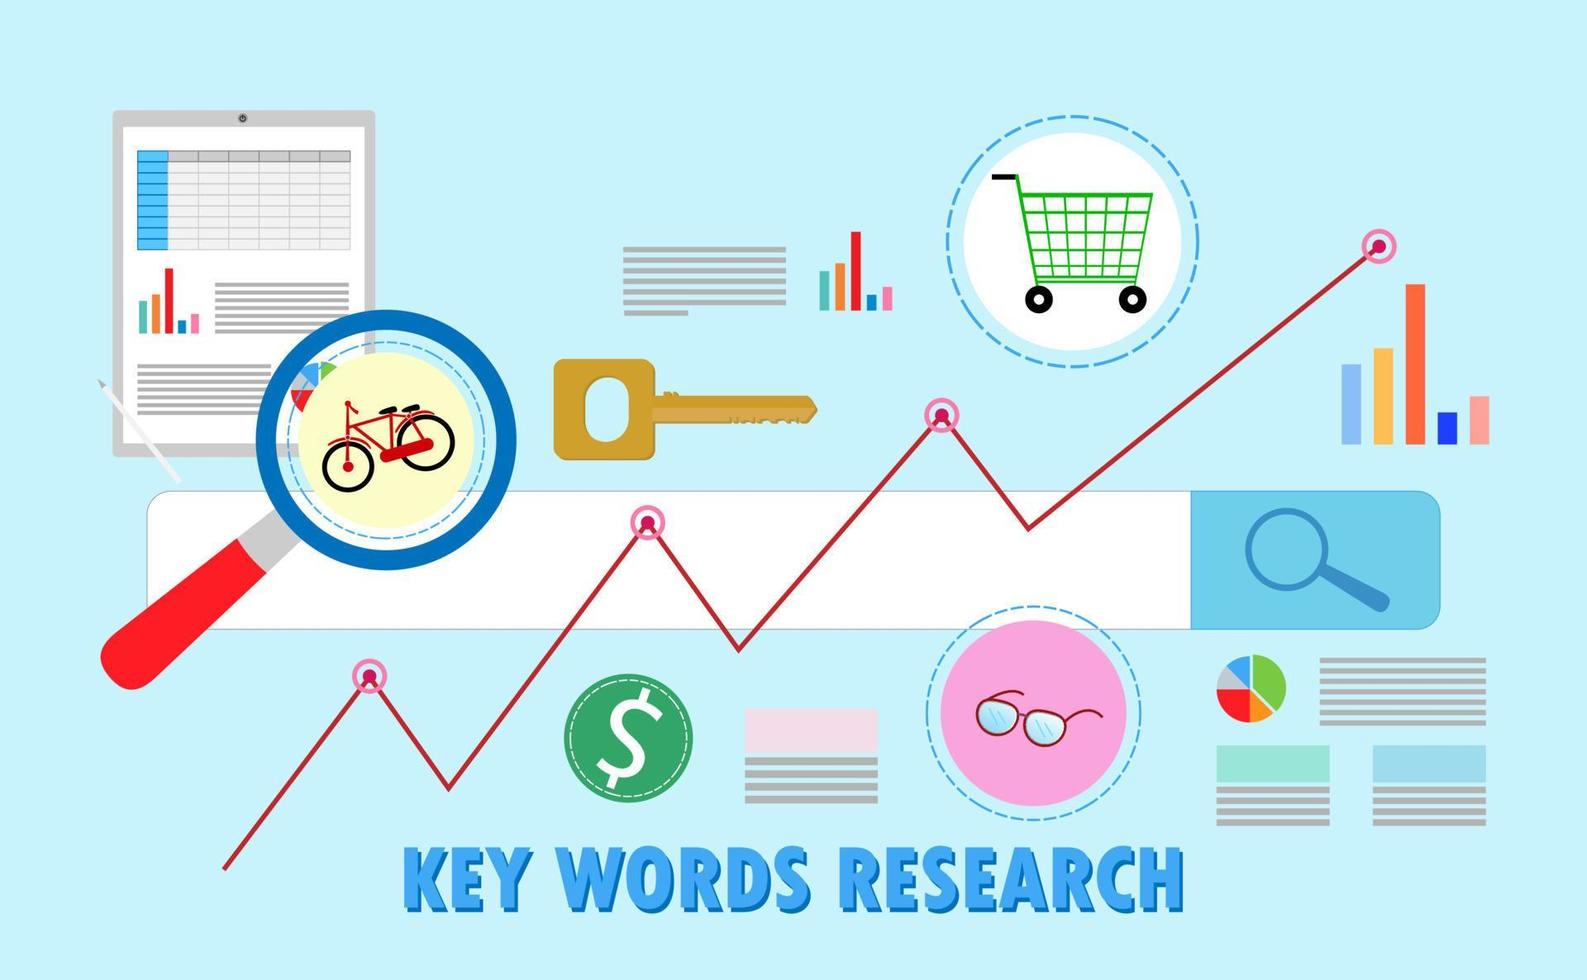 campaña de marketing seo, sem, optimización de motores de búsqueda empresarial. vector plano de búsqueda de marketing en Internet con iconos y textos